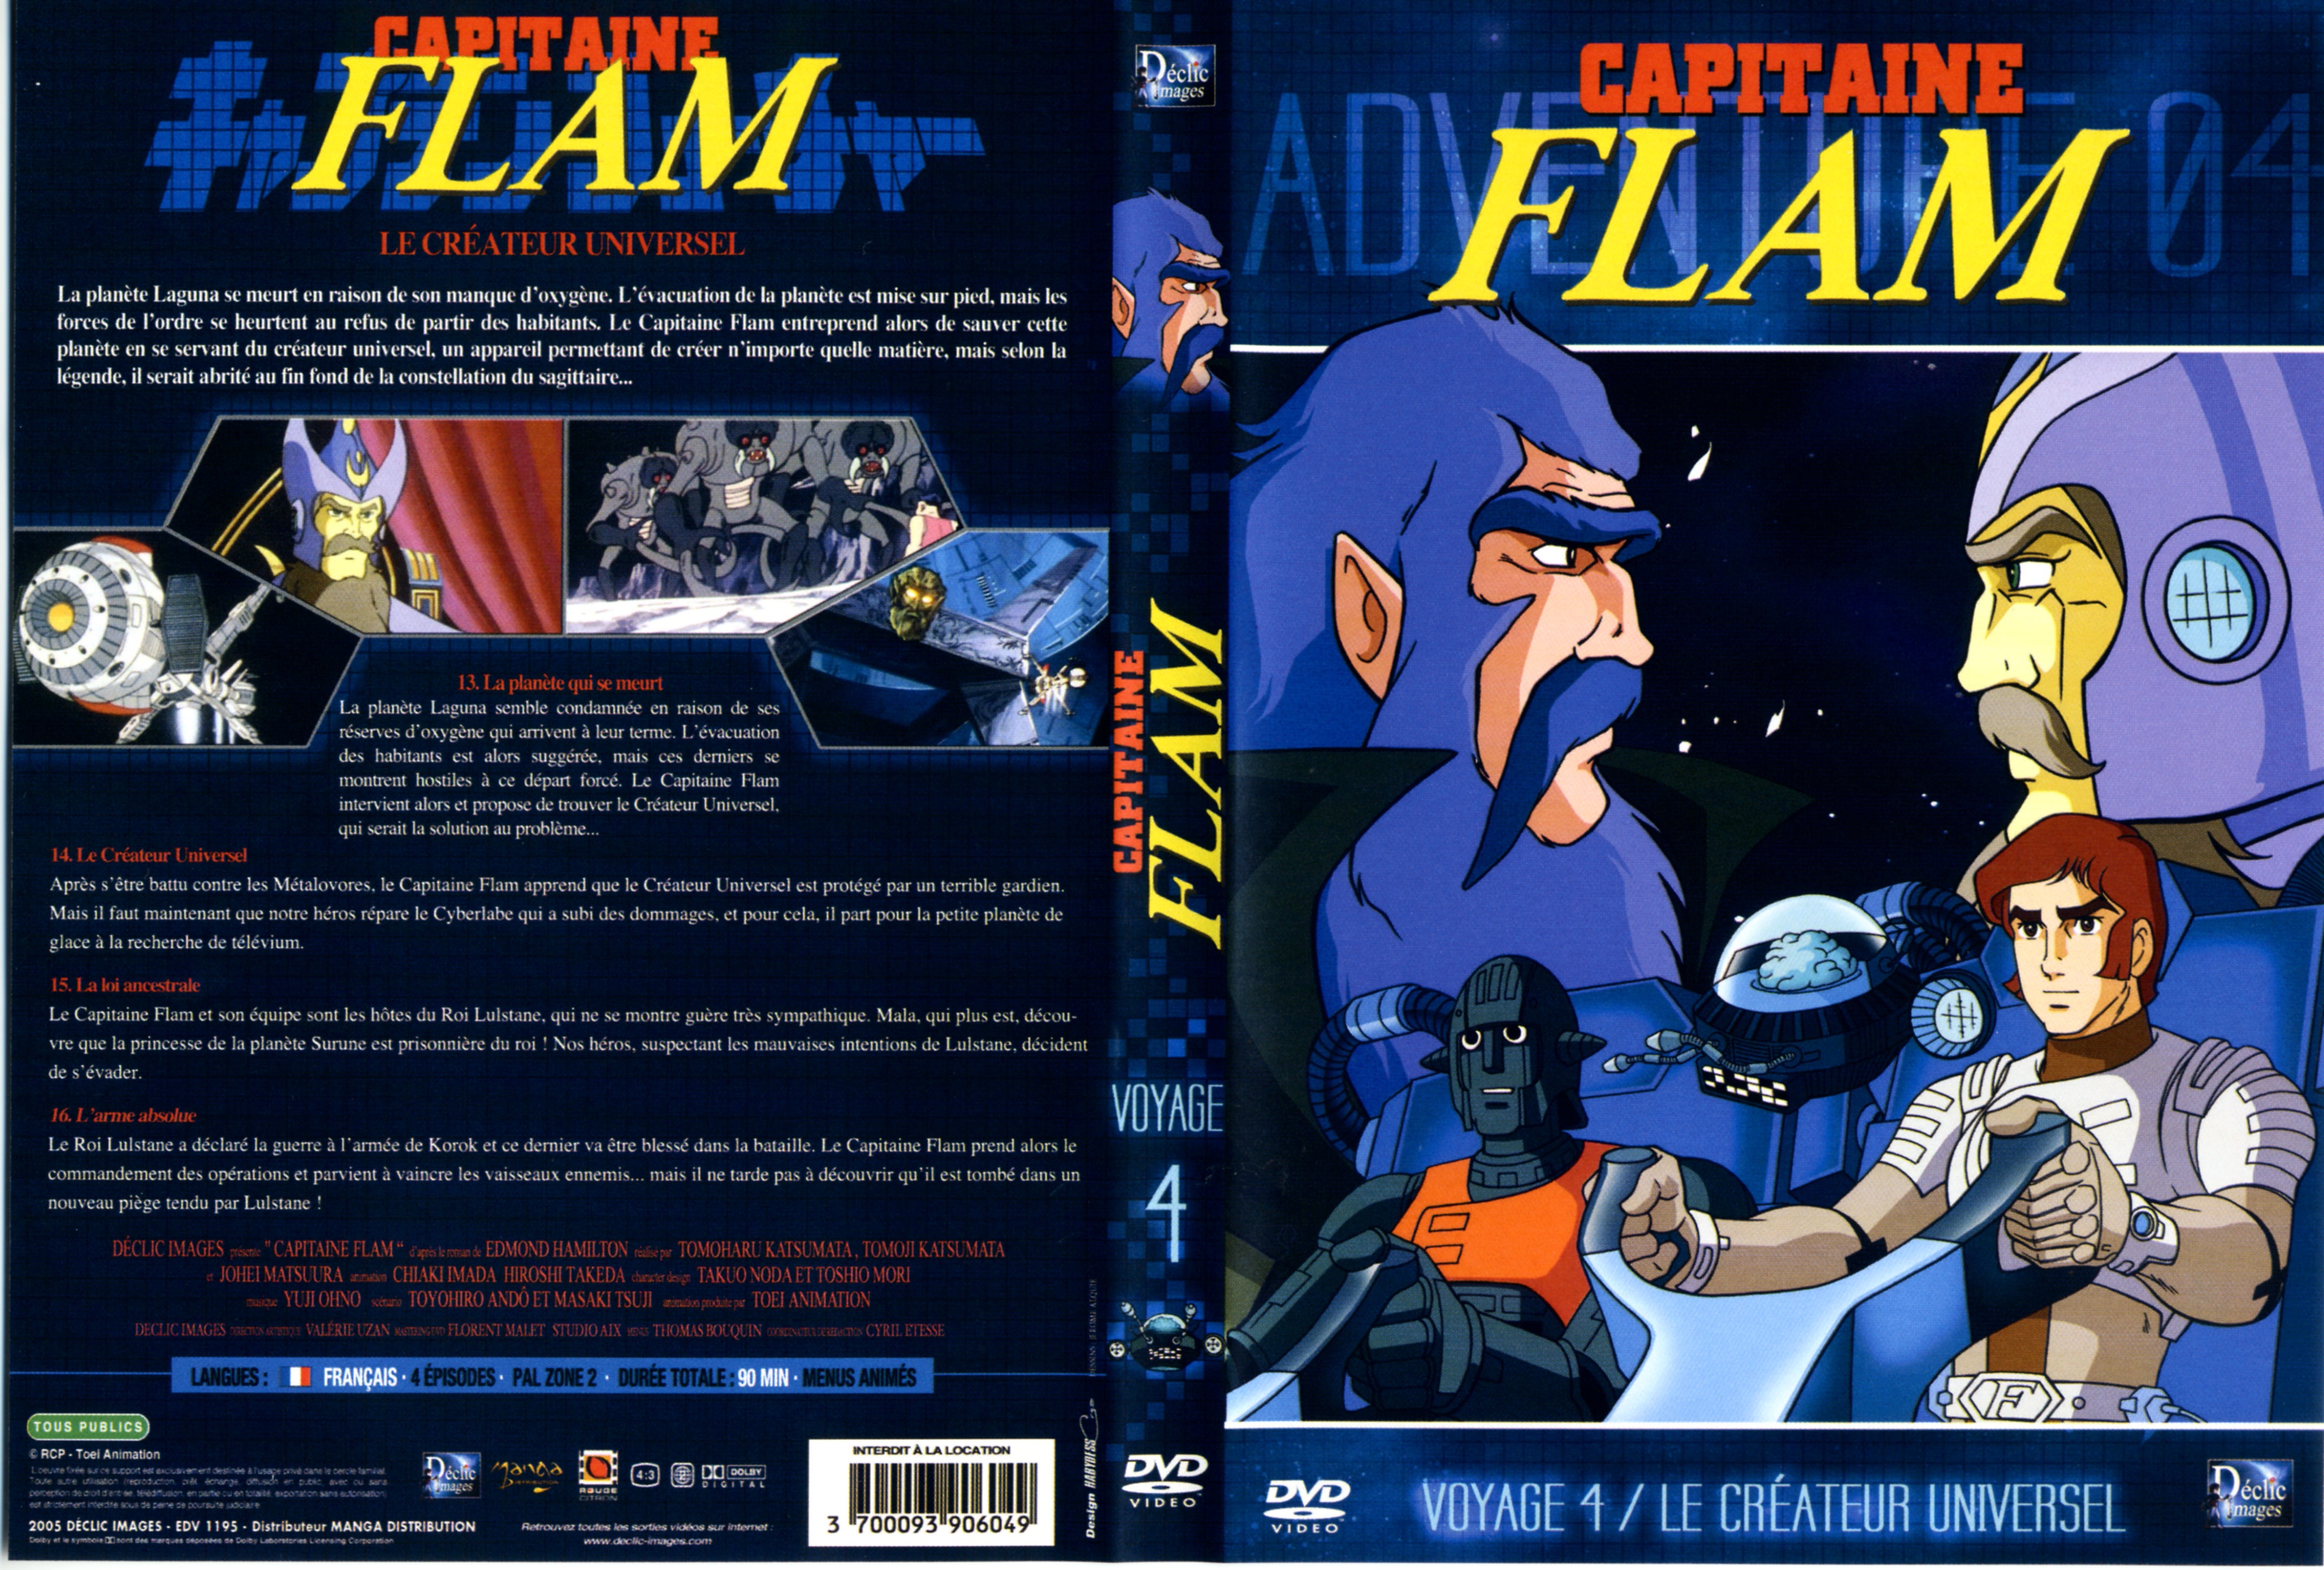 Jaquette DVD Capitaine Flam vol 4 (DECLIC IMAGES)